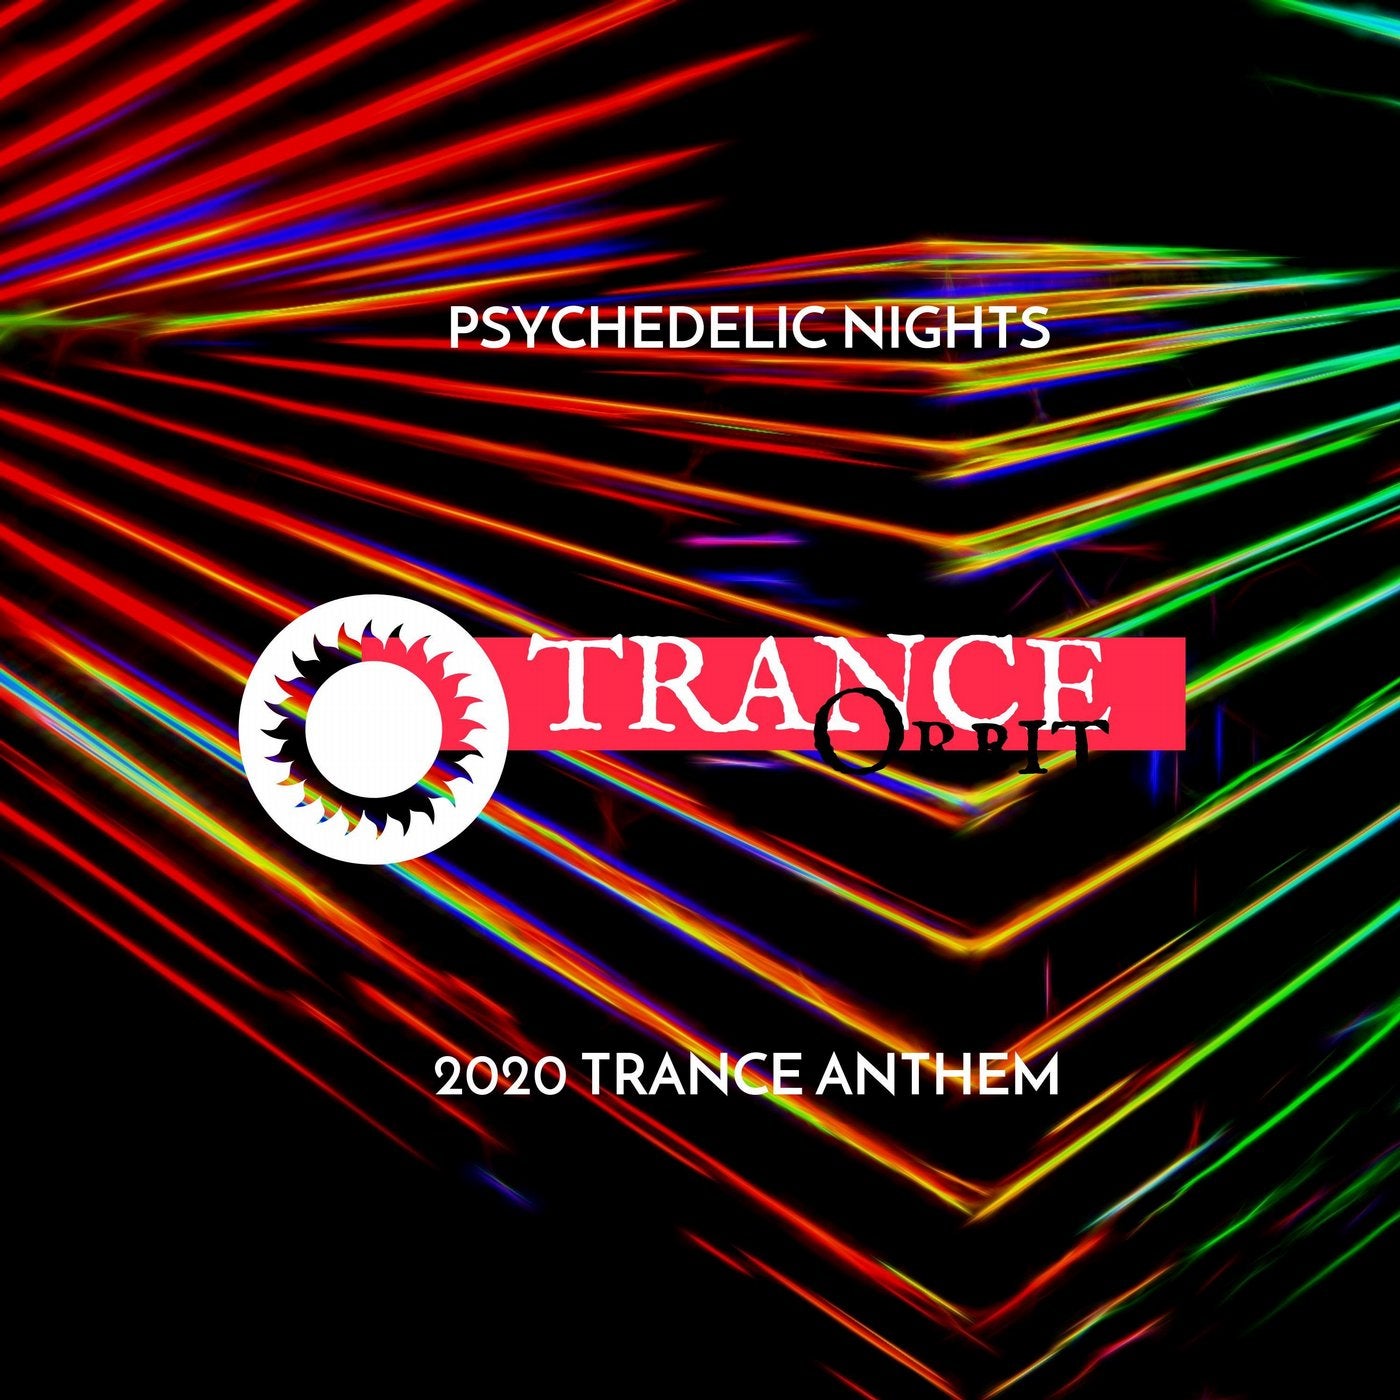 Psychedelic Nights - 2020 Trance Anthem